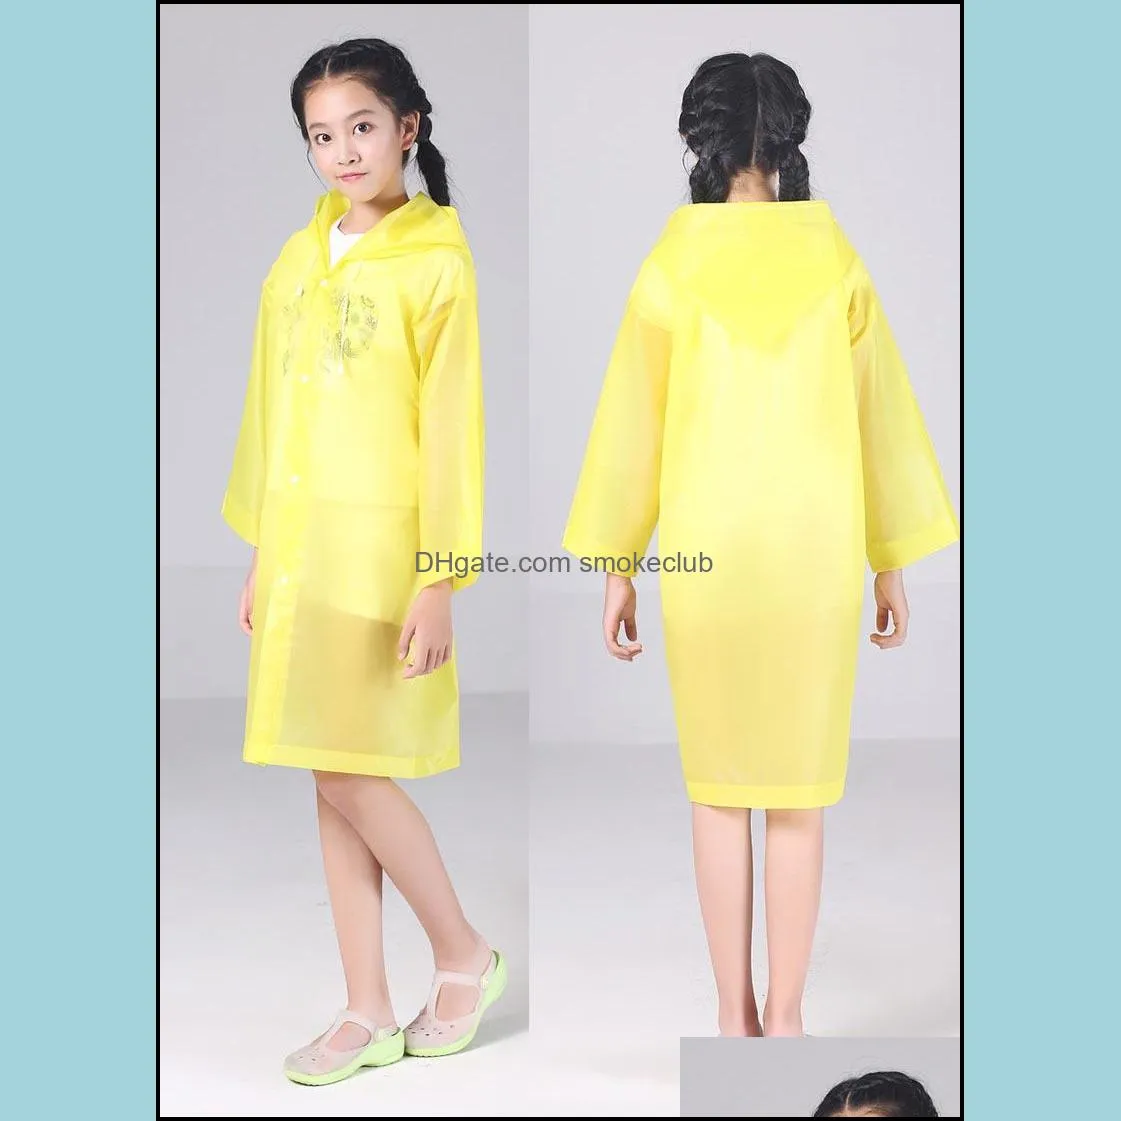 Kids Hooded Transparent Jacket Raincoats Rain Coat Poncho Raincoat Cover Long Girl Boy Rainwear 5 Colors